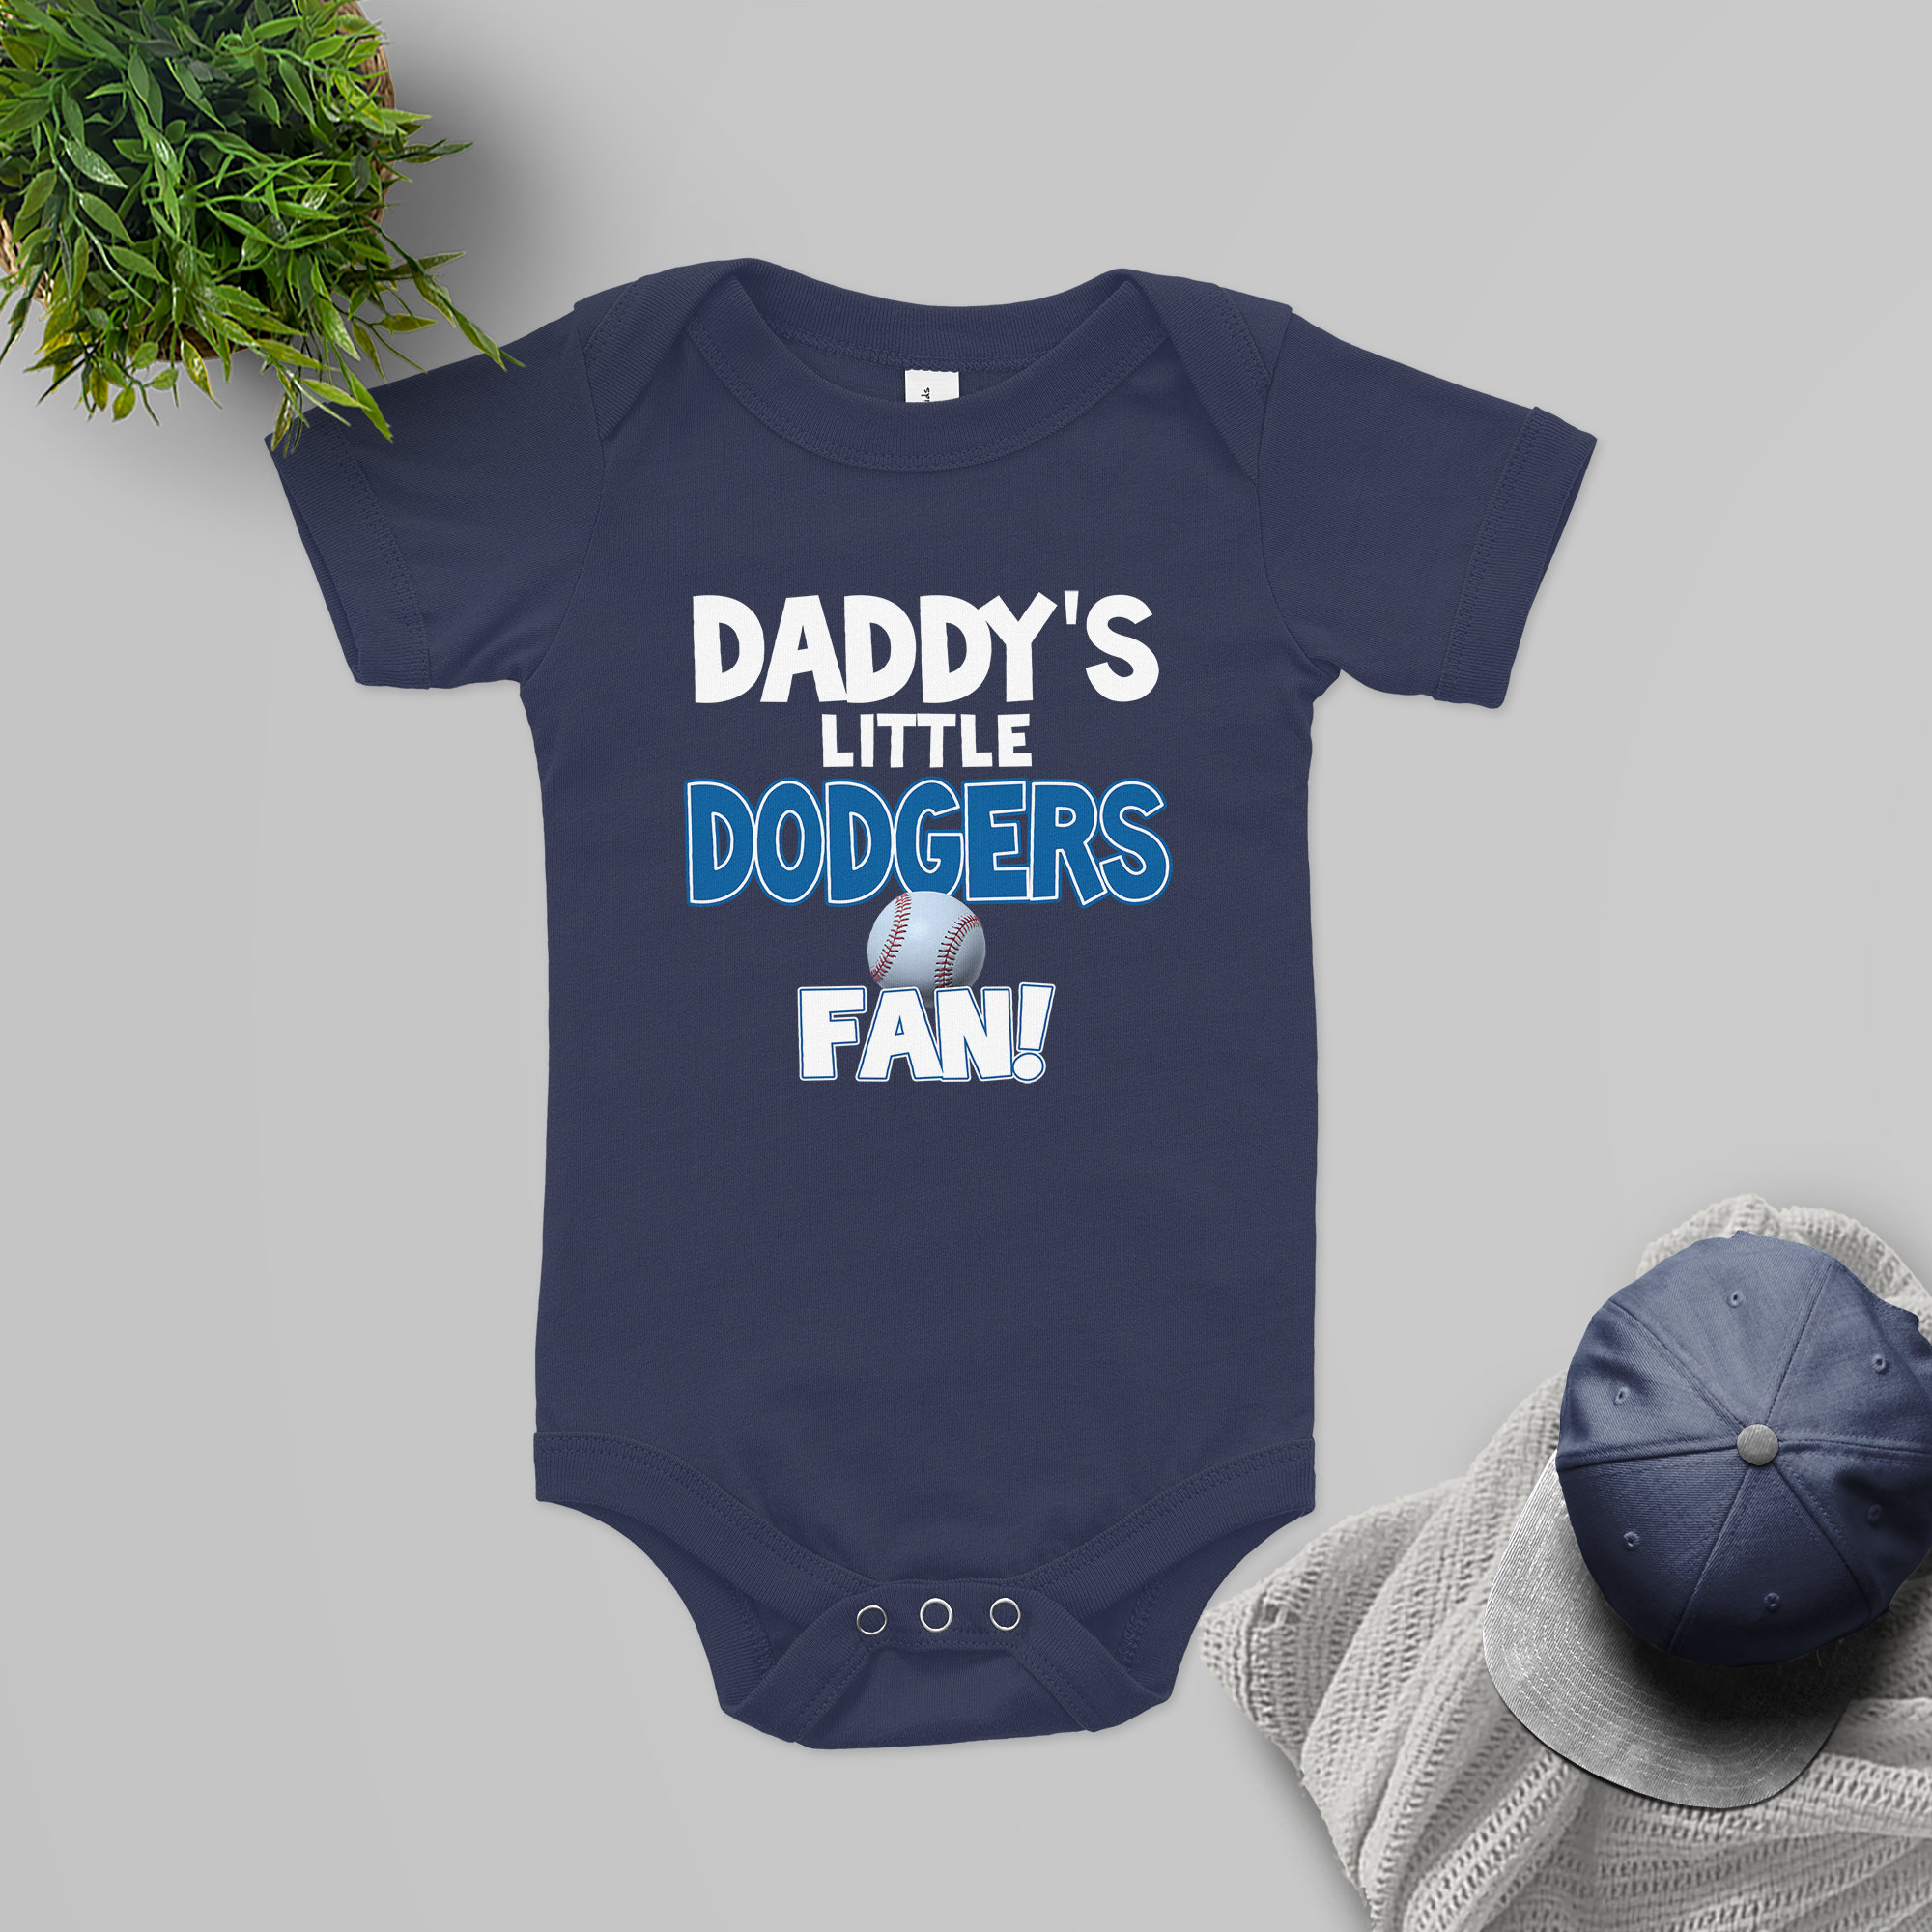 Buy Baby Dodgers Jersey Online In India -  India